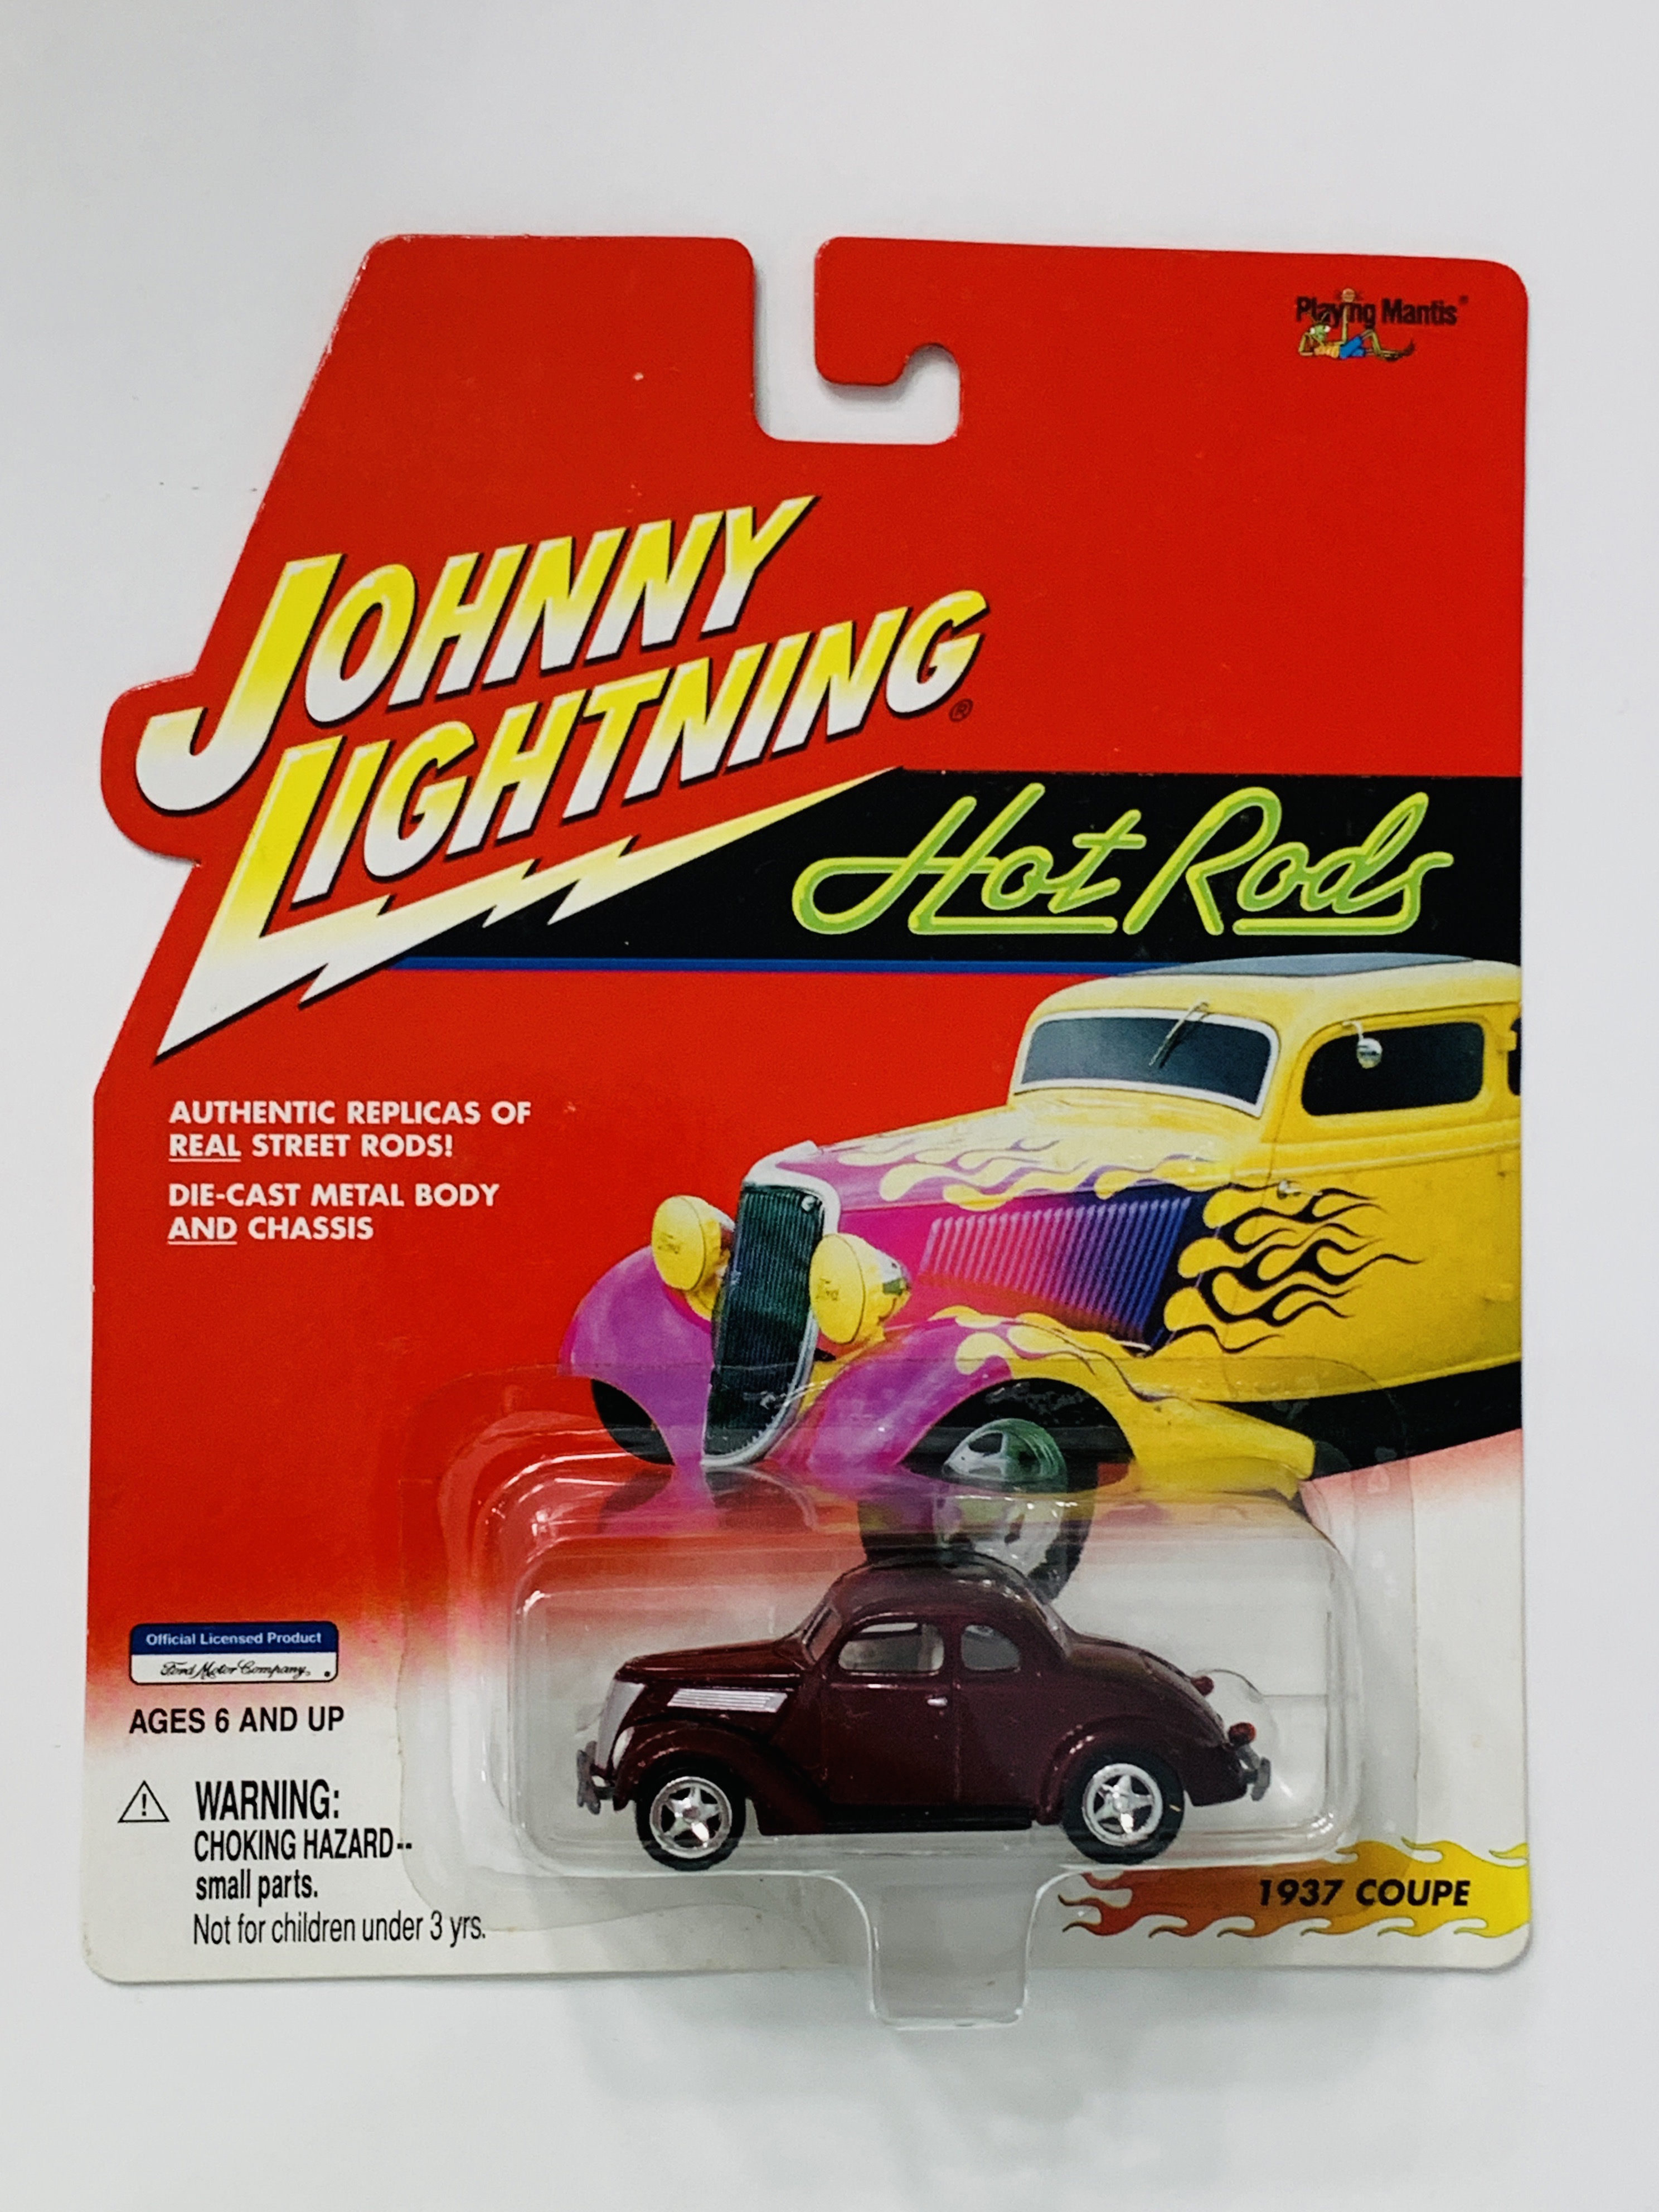 Johnny Lightning Hot Rods 1937 Coupe